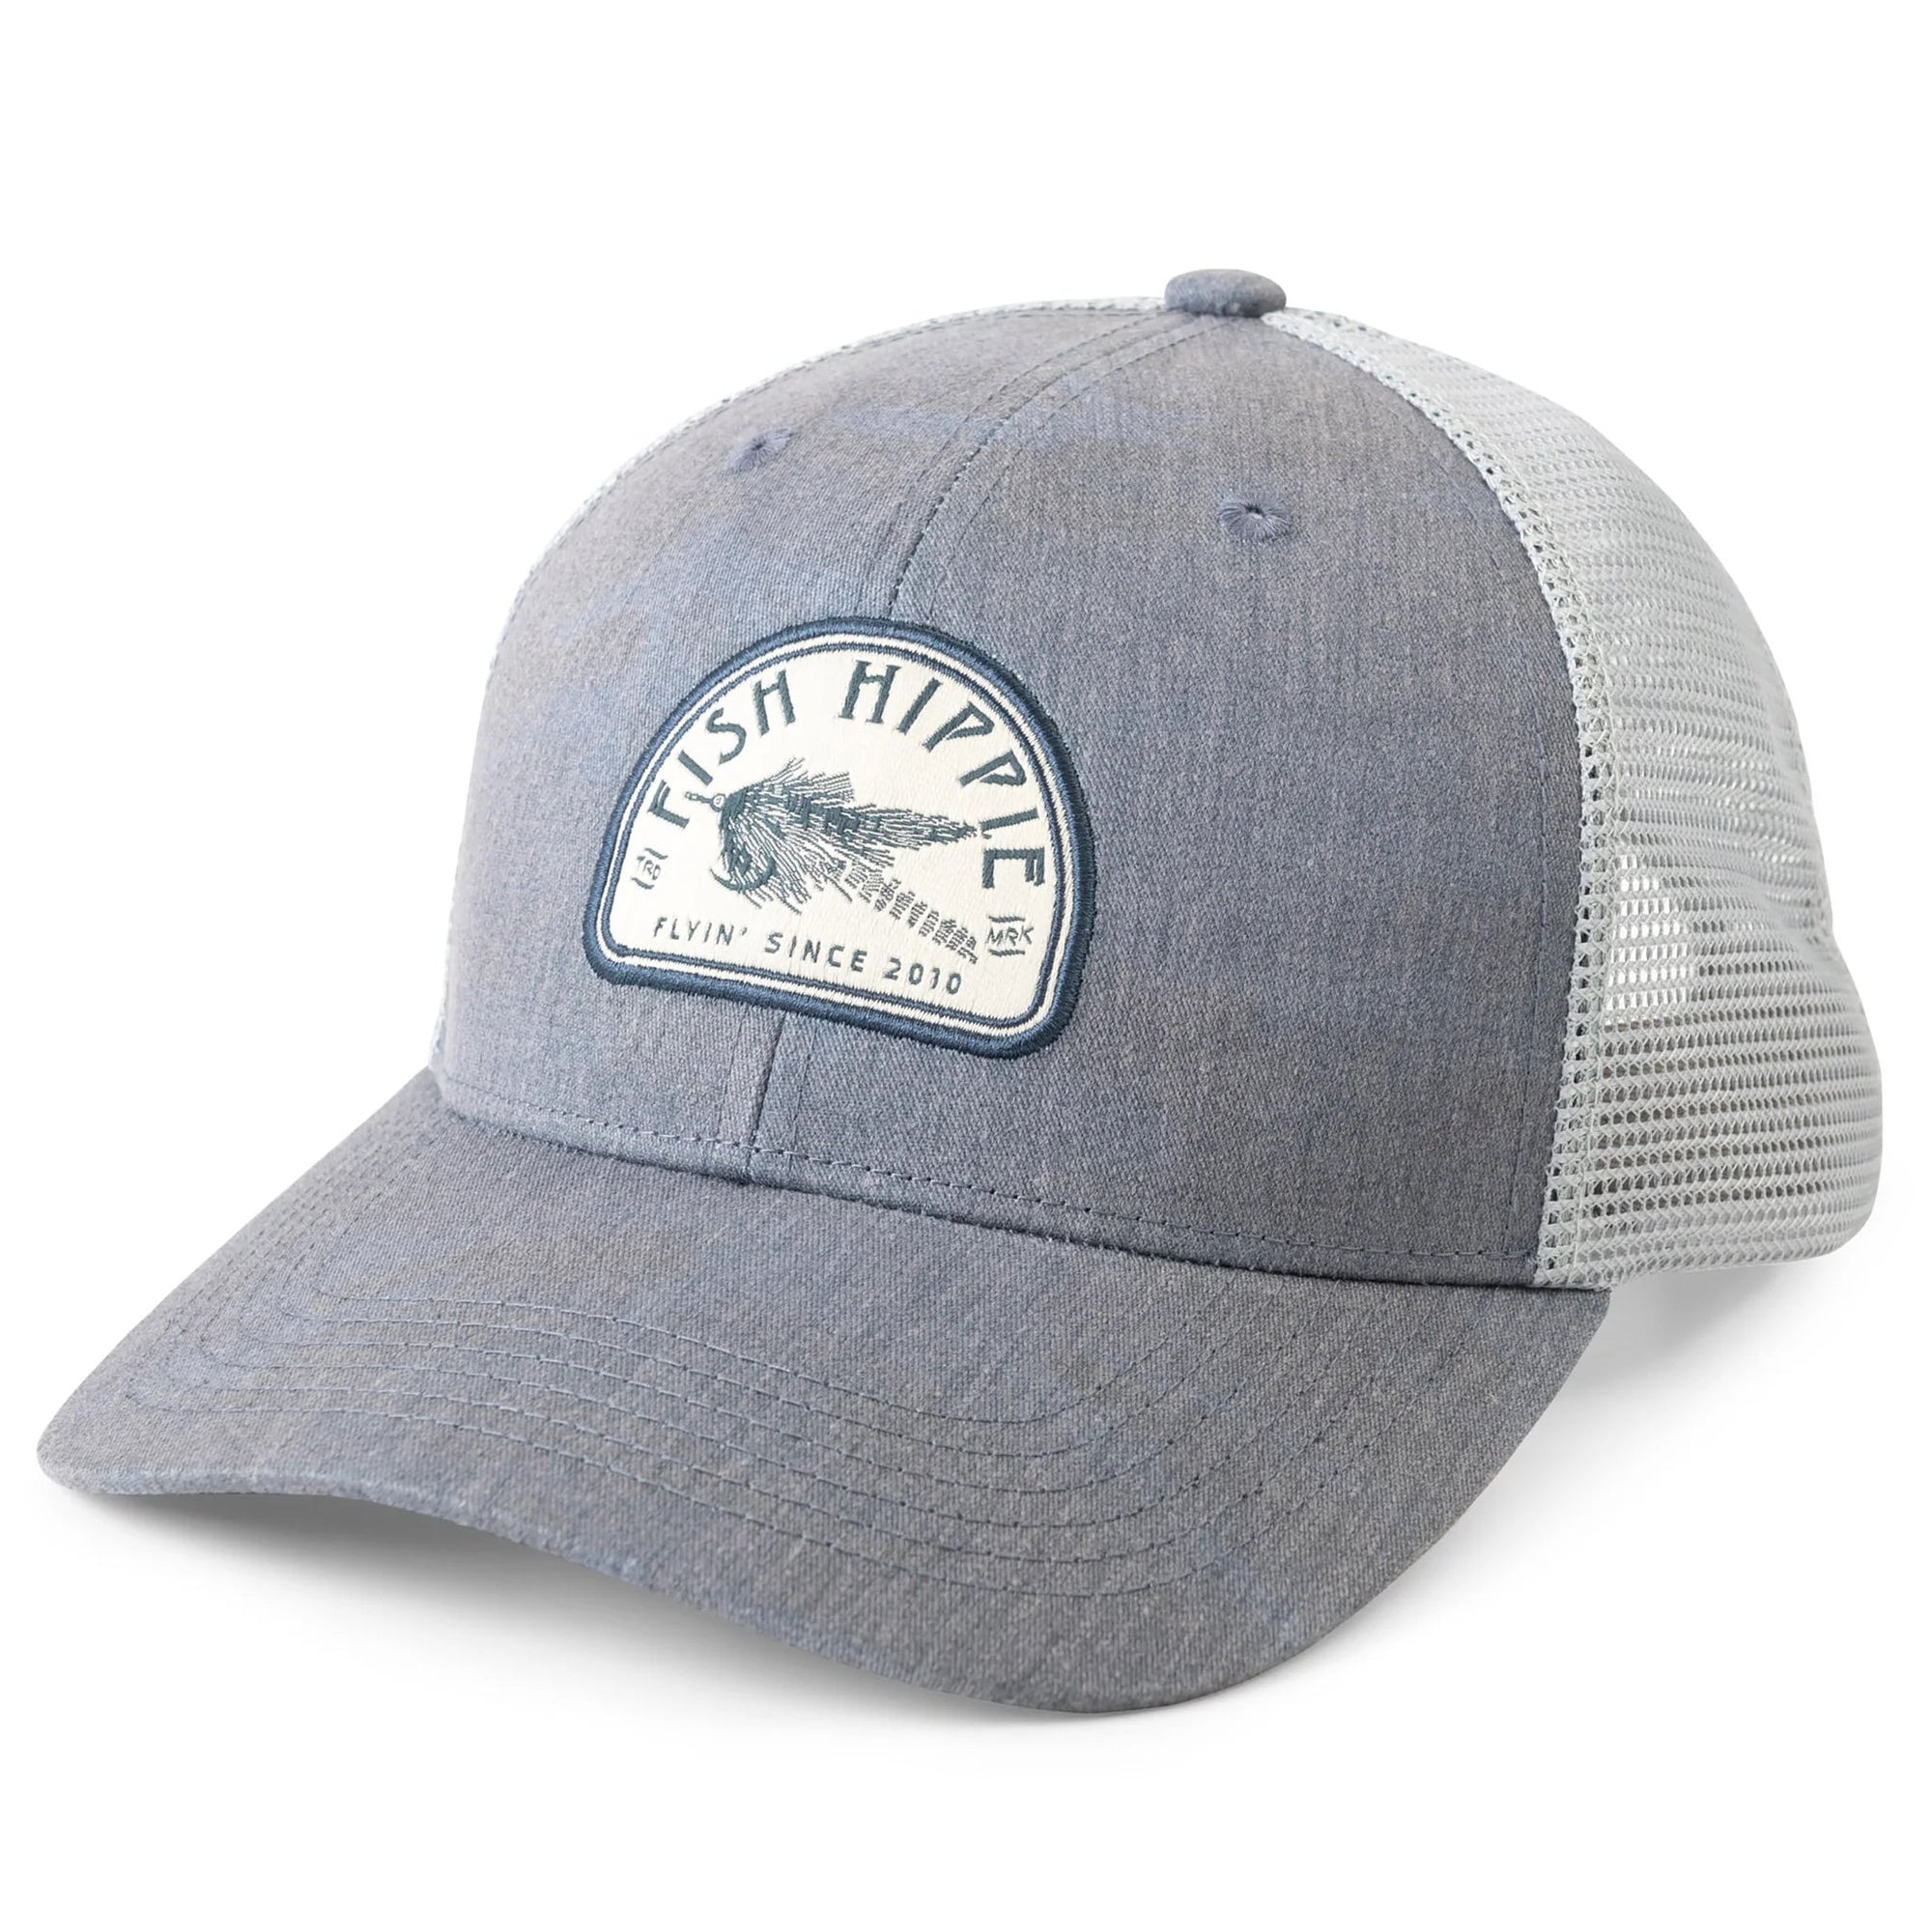 FISH HIPPIE Men's Hats NAVY CAMO Fish Hippie Flyin Trucker Hat || David's Clothing H10000418